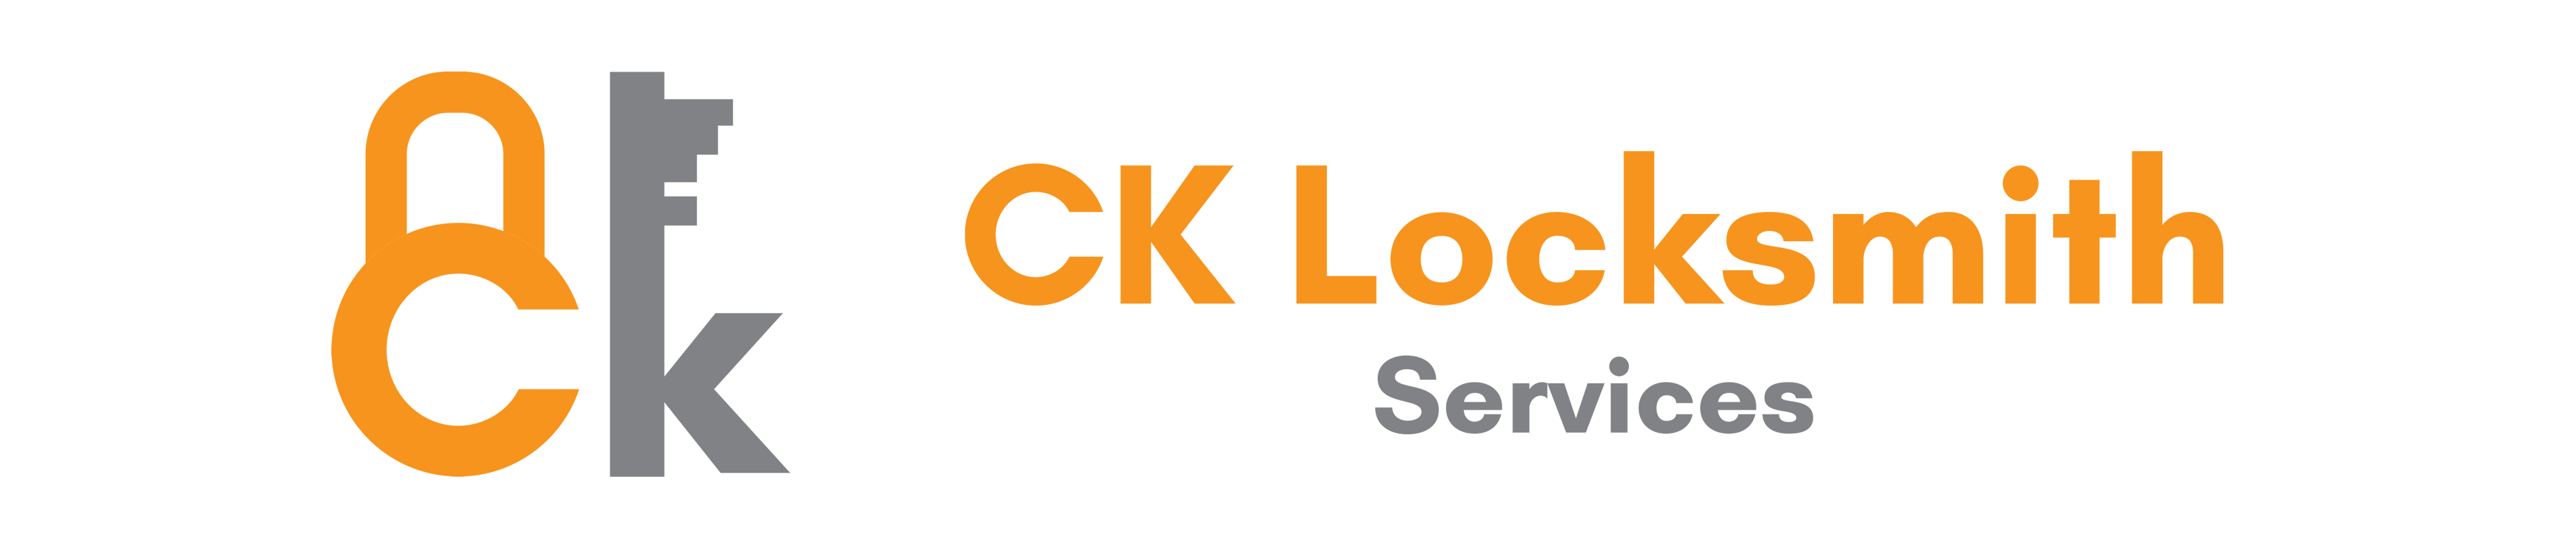 CK-Locksmith-Services-Logo.png